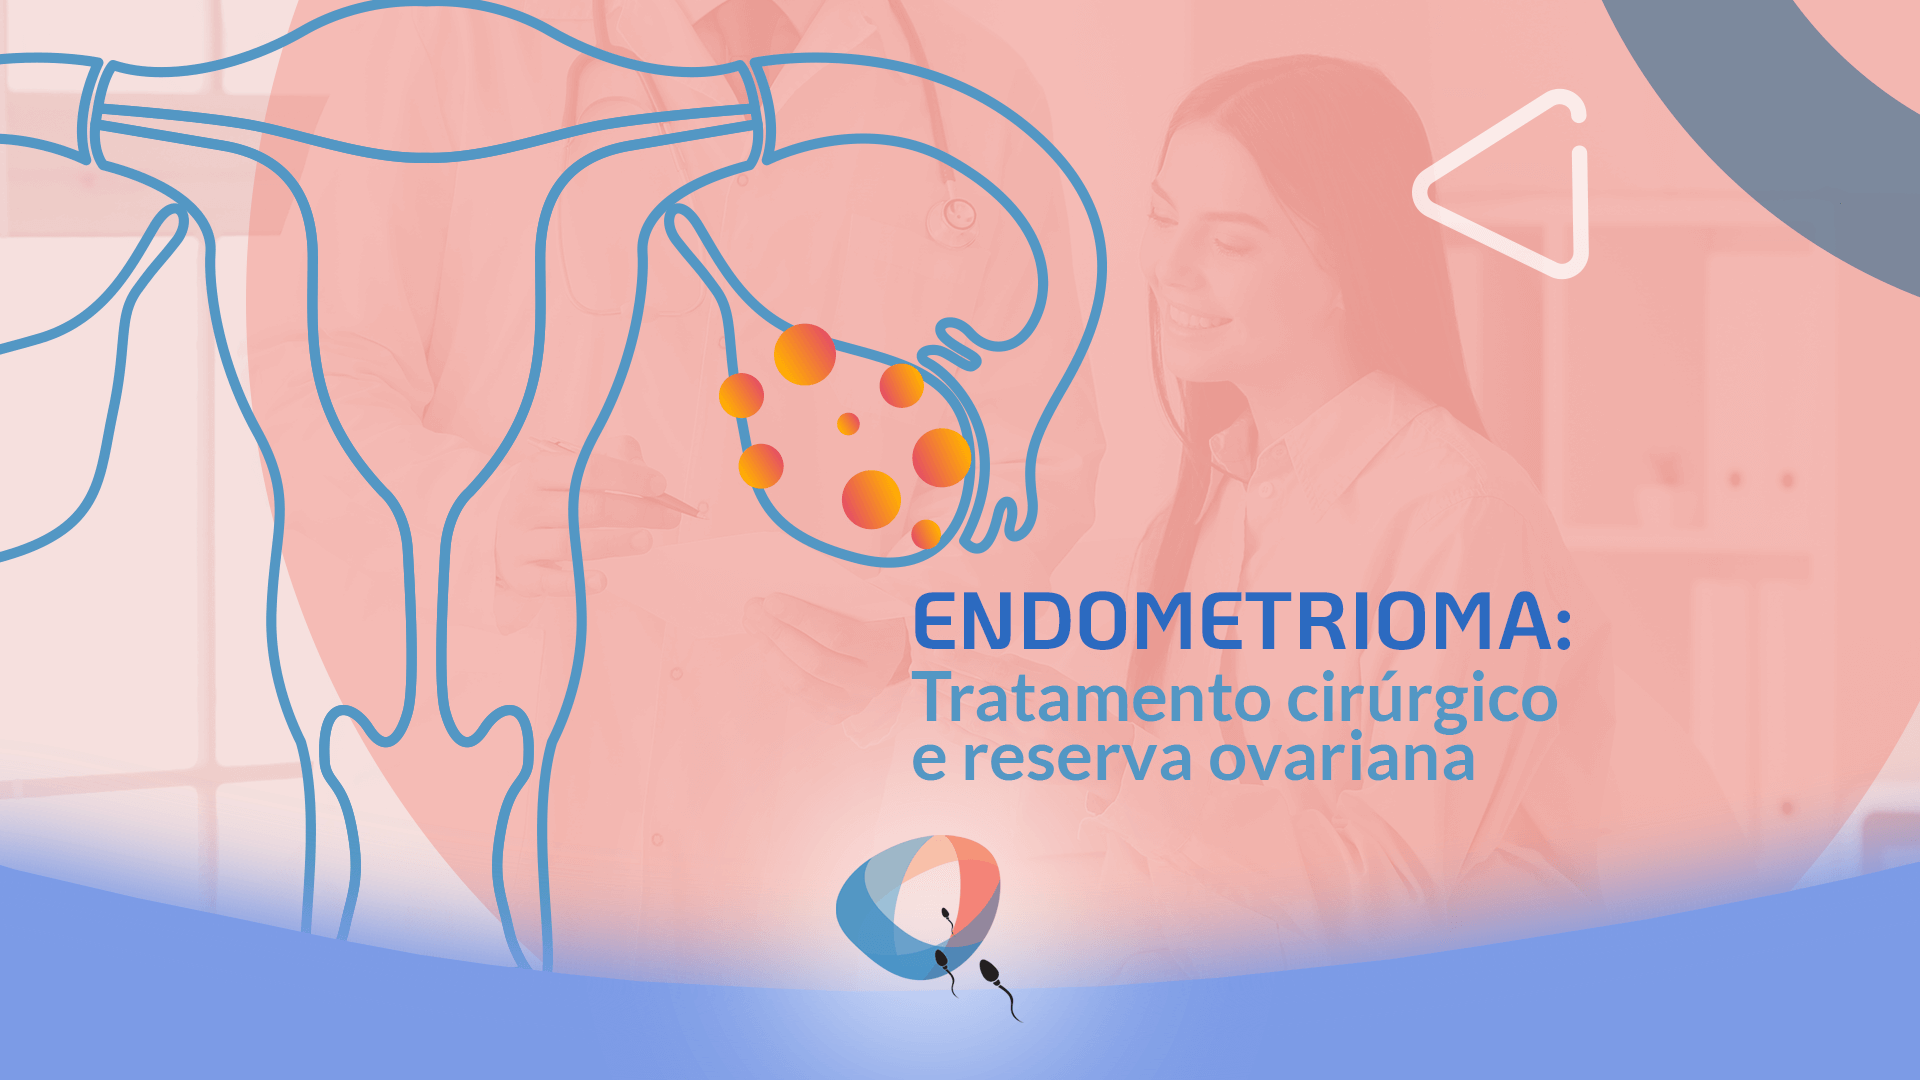 Endometrioma: tratamento cirúrgico e reserva ovariana